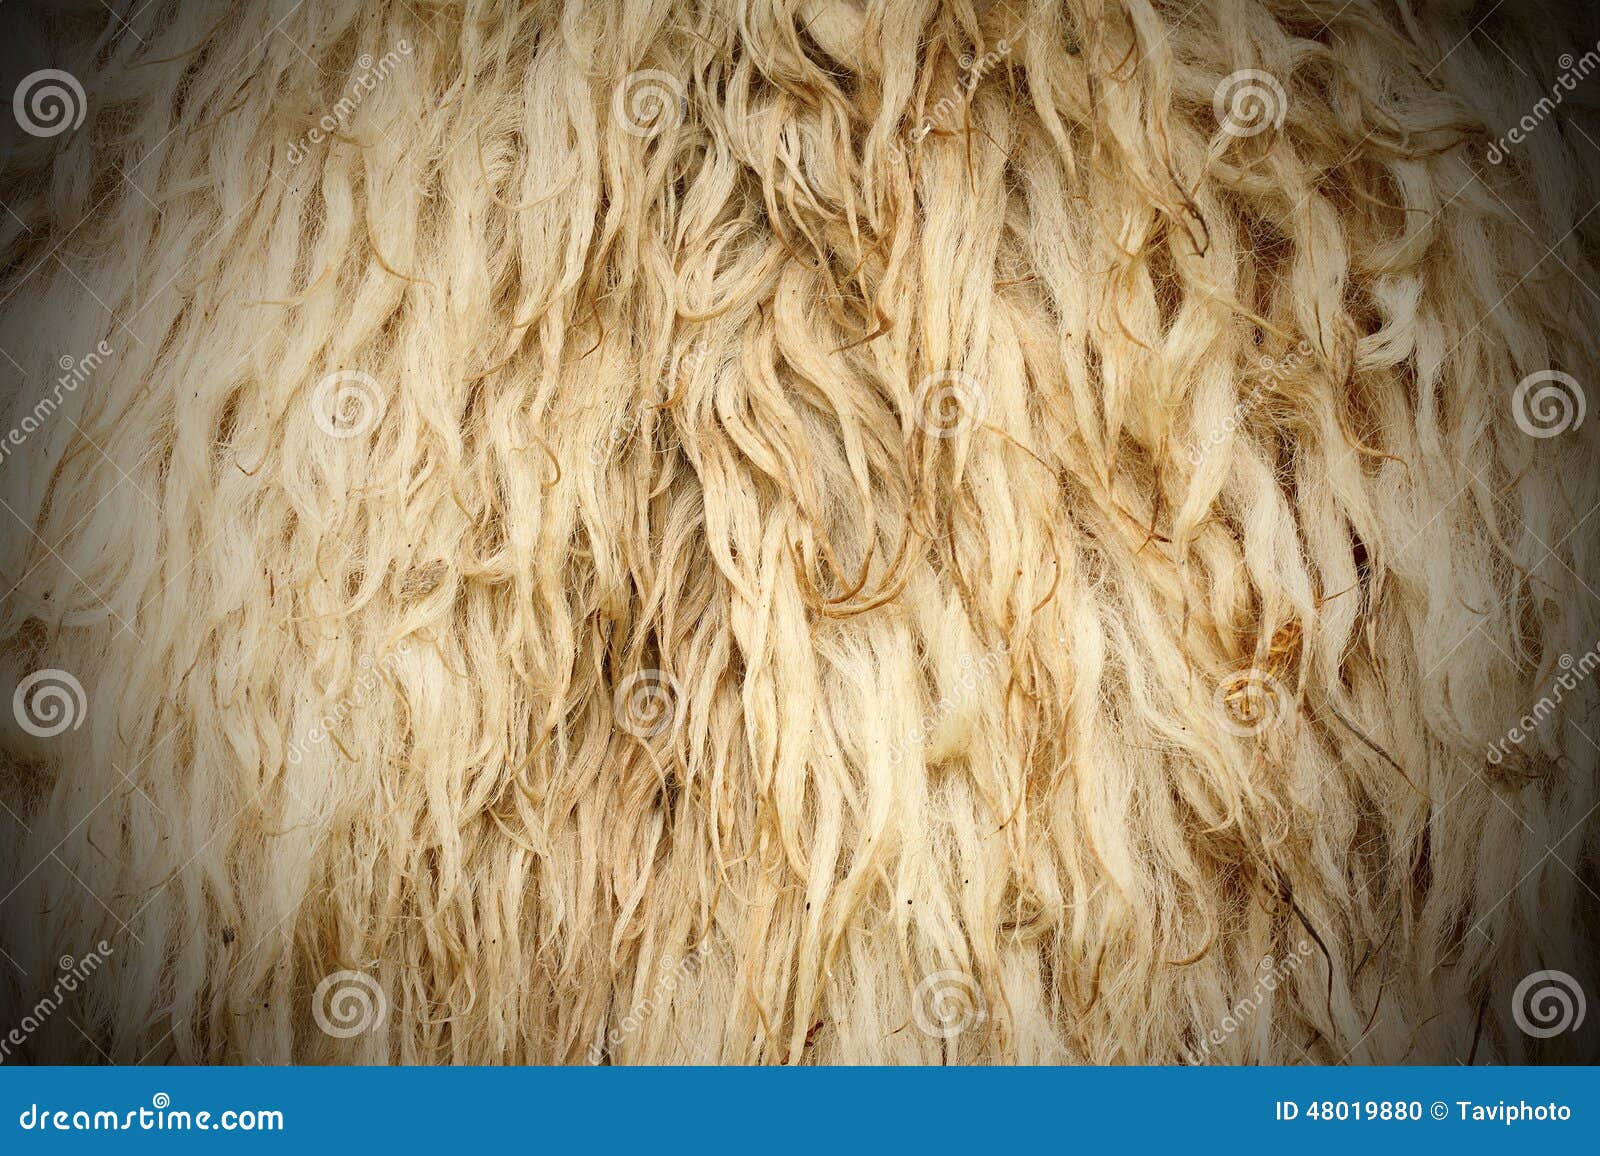 Long sheep fur stock photo. Image of luxurious, detail - 48019880